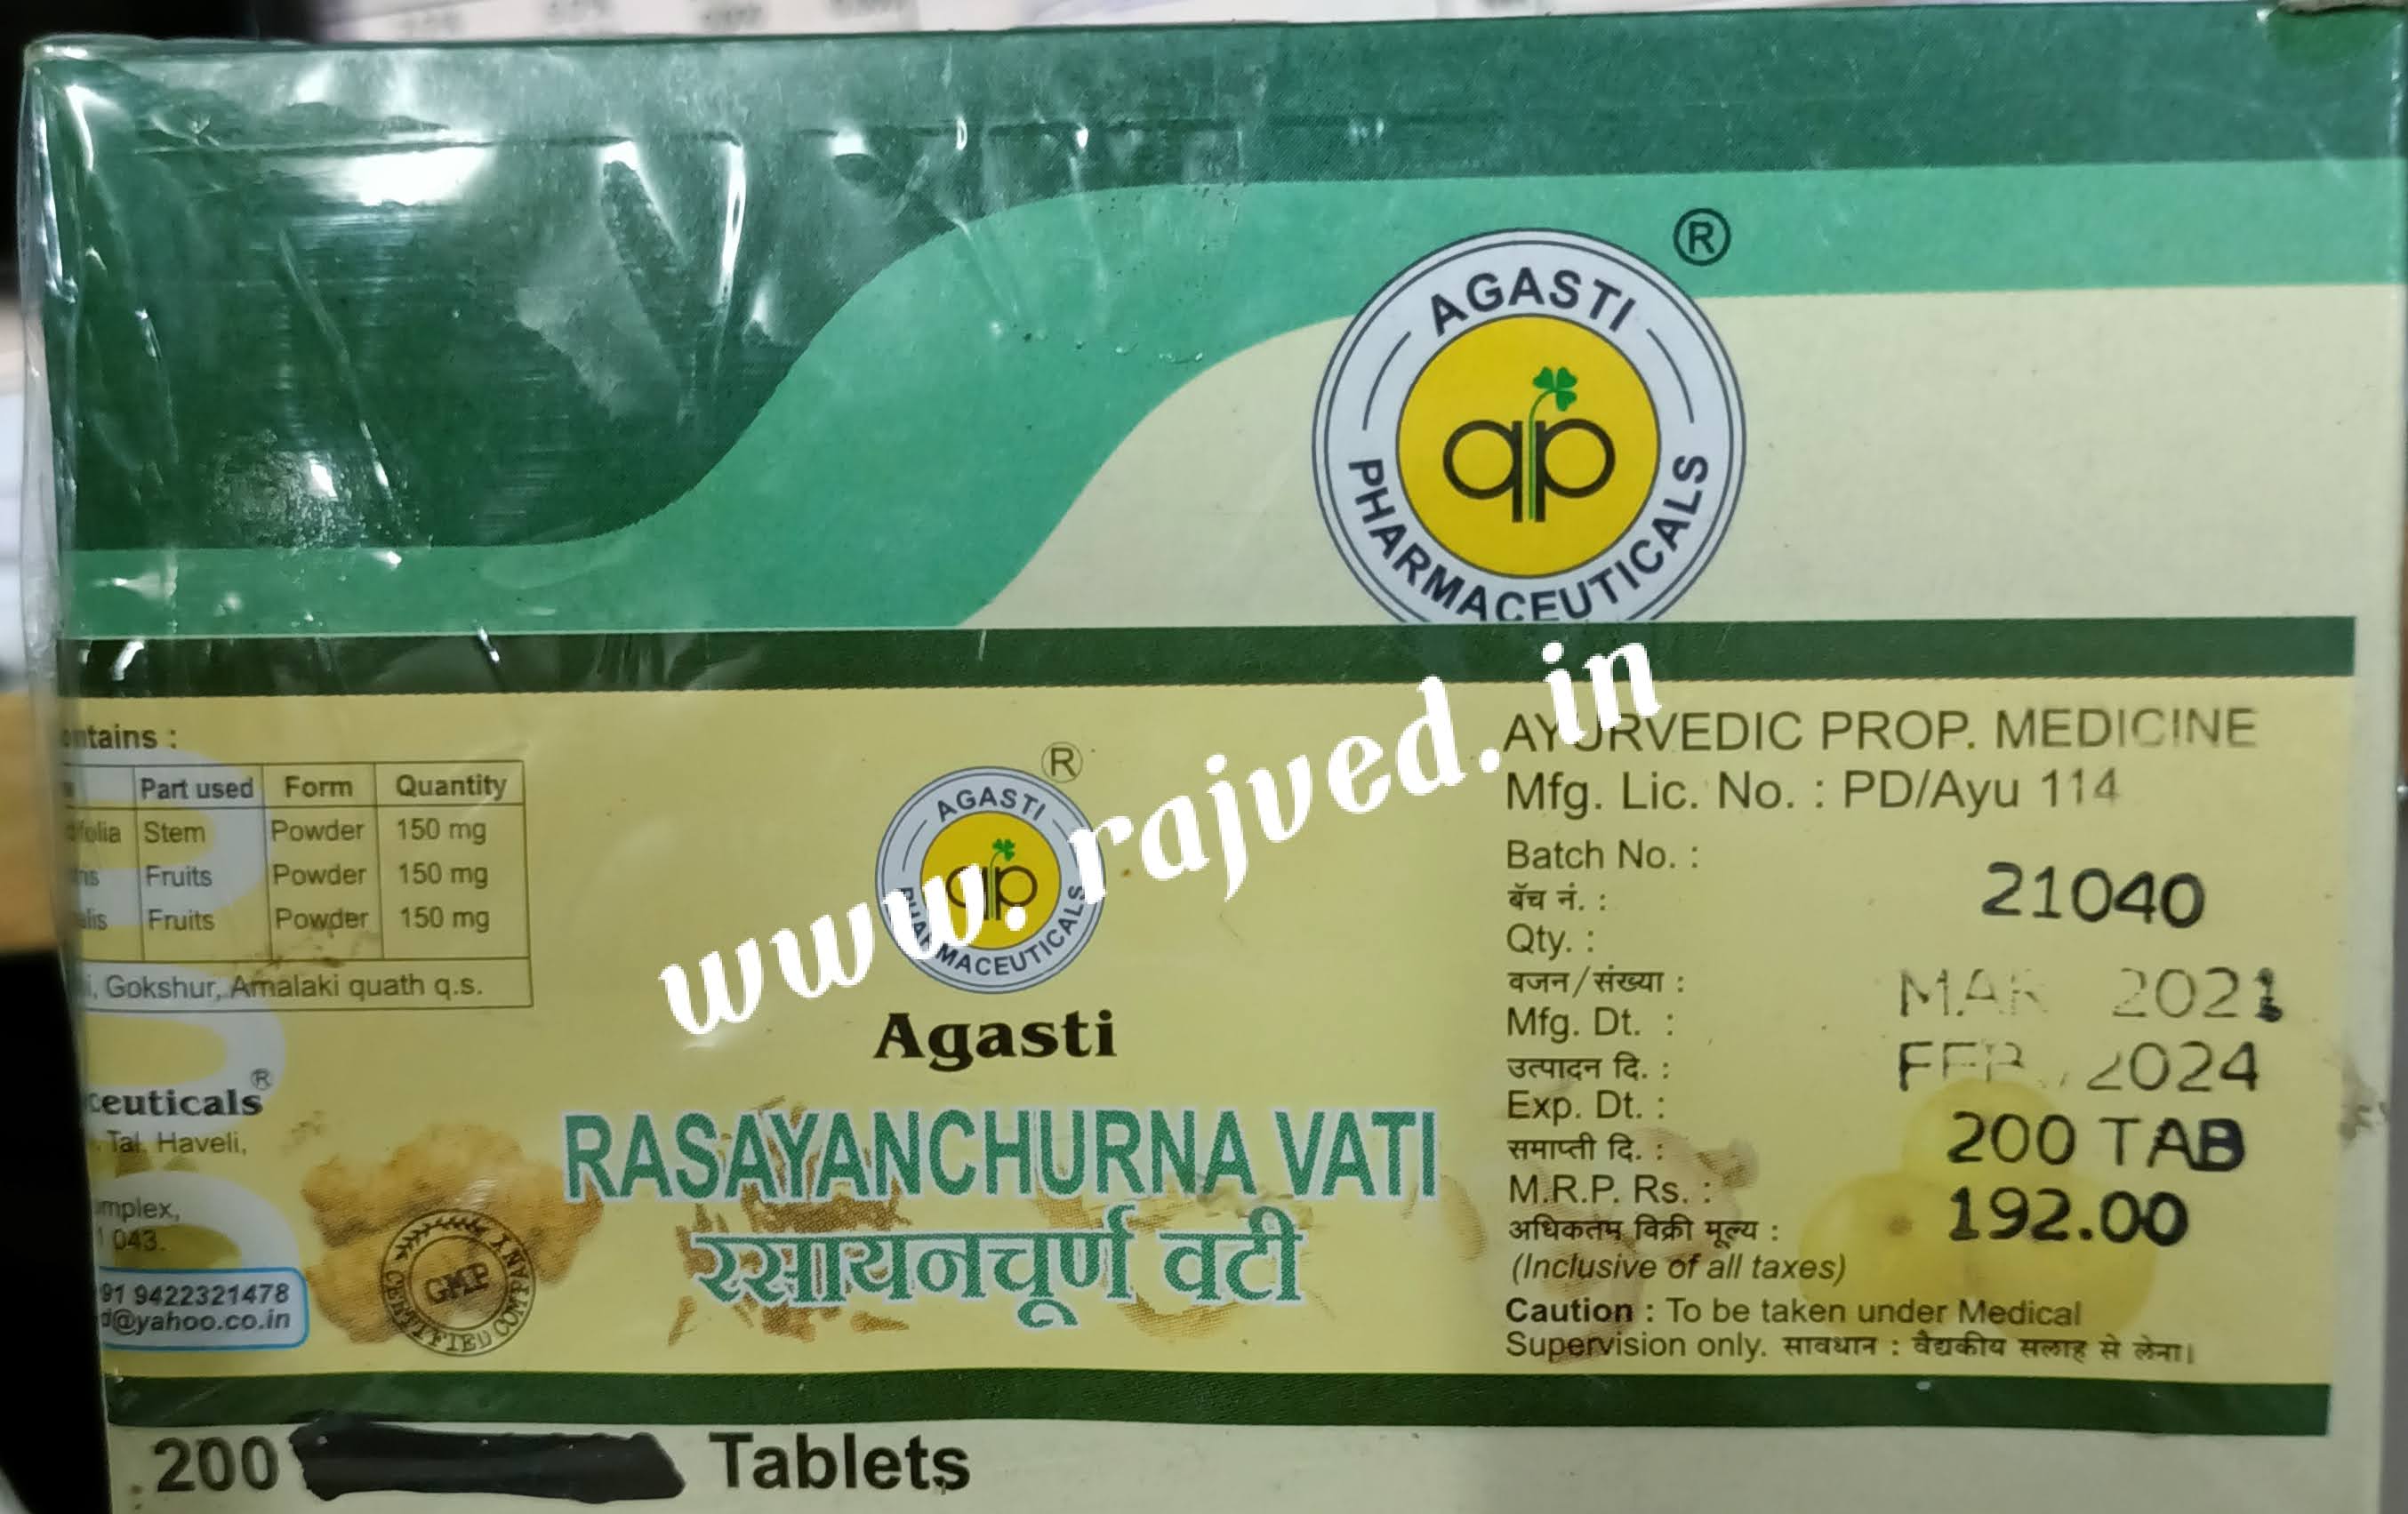 rasayan churna vati tablets 250gm 500 tabs agasti pharmaceuticals